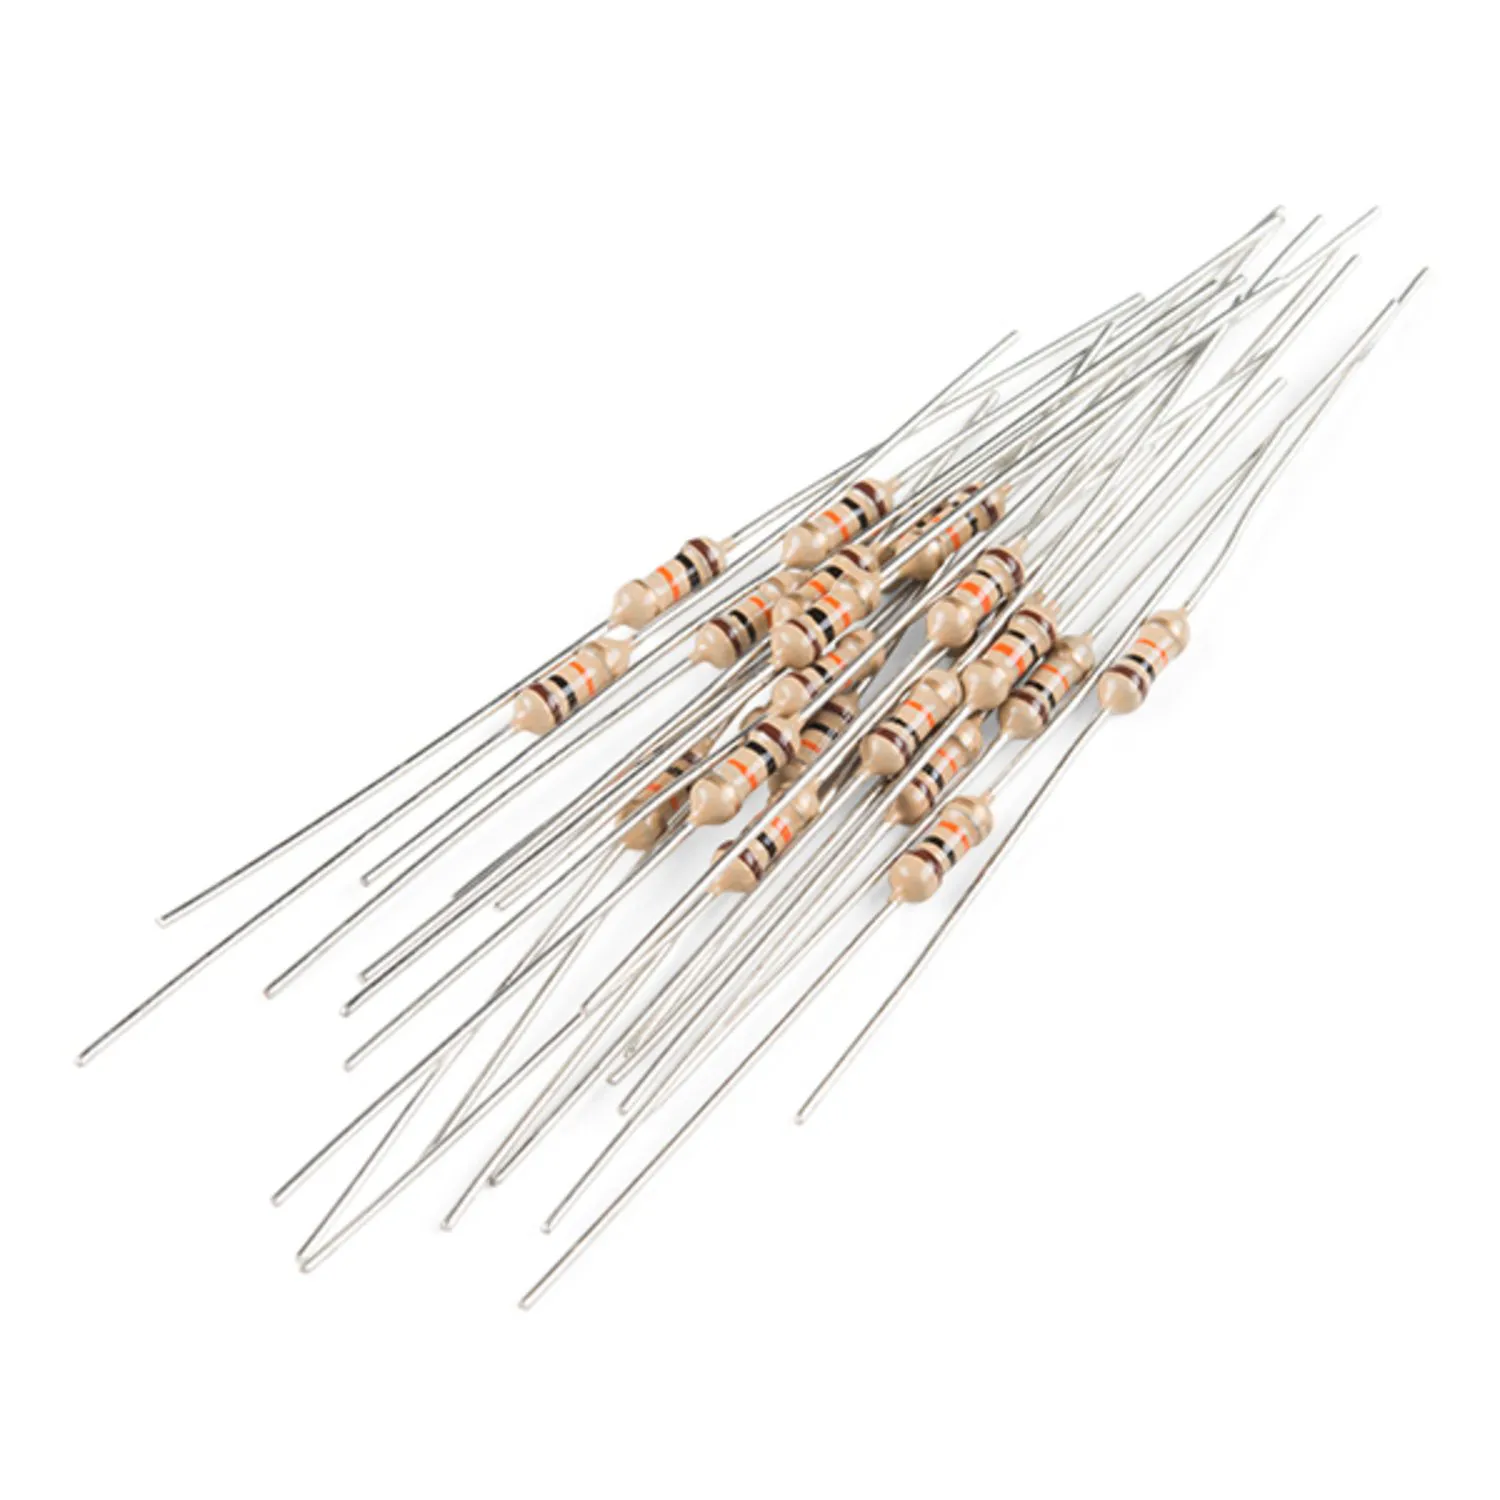 Photo of Resistor 10K Ohm 1/4 Watt PTH - 20 pack (Thick Leads)